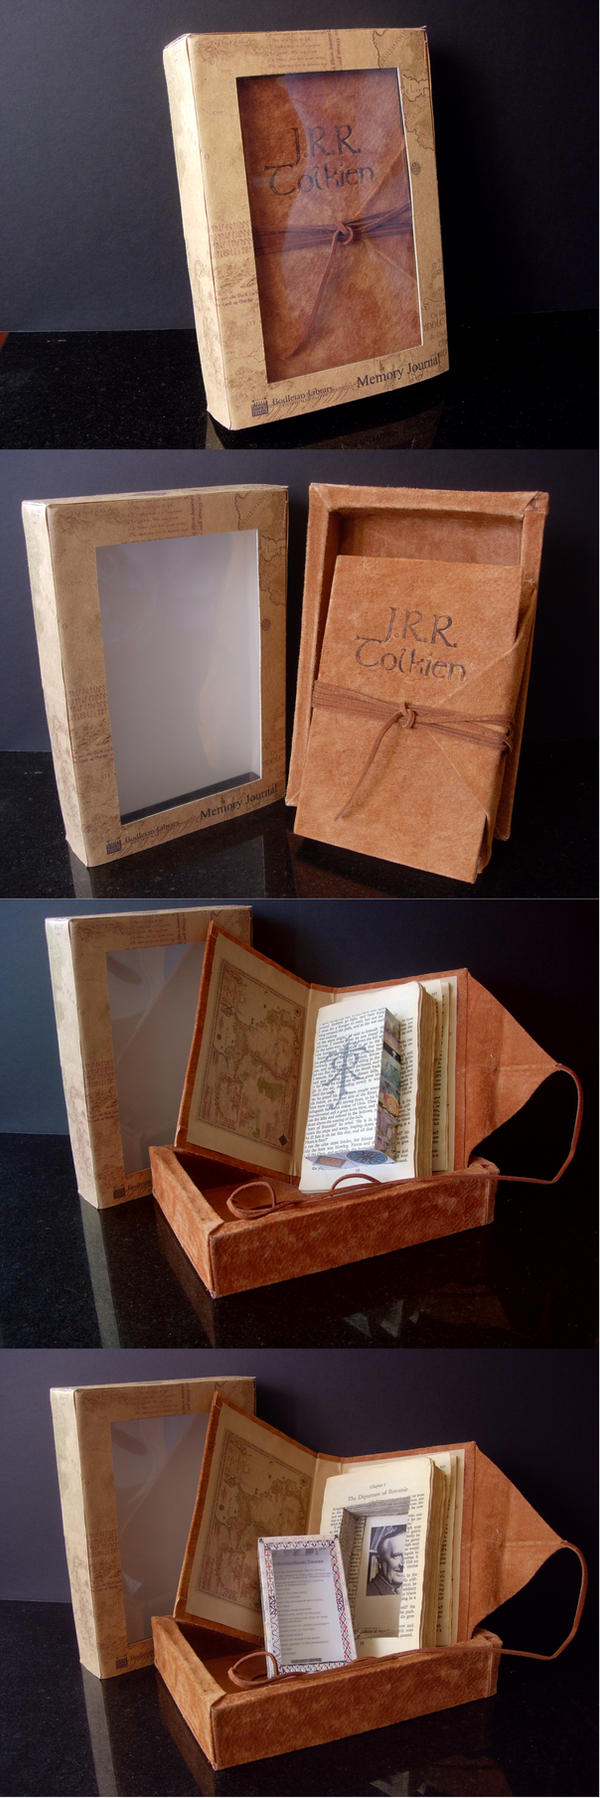 Tolkien Book + Package Design